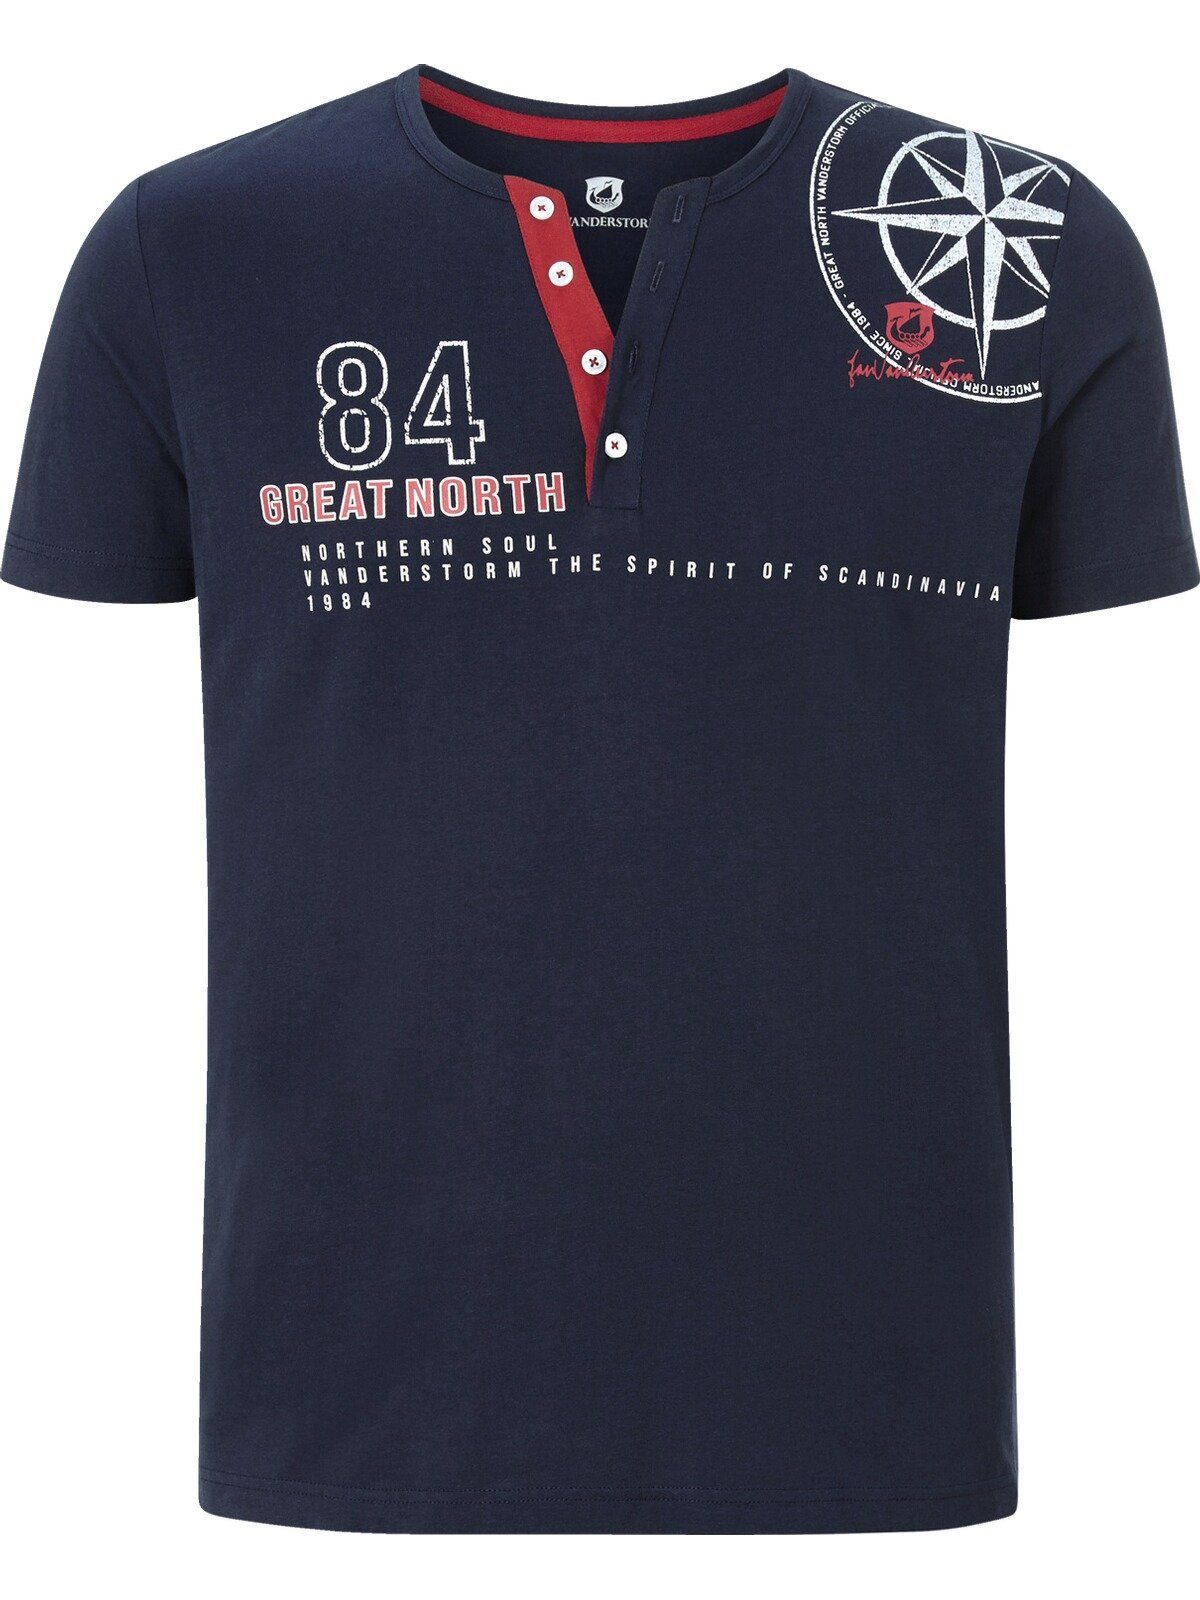 Jan dunkelblau im Baseball-Look T-Shirt LINDRAD Vanderstorm